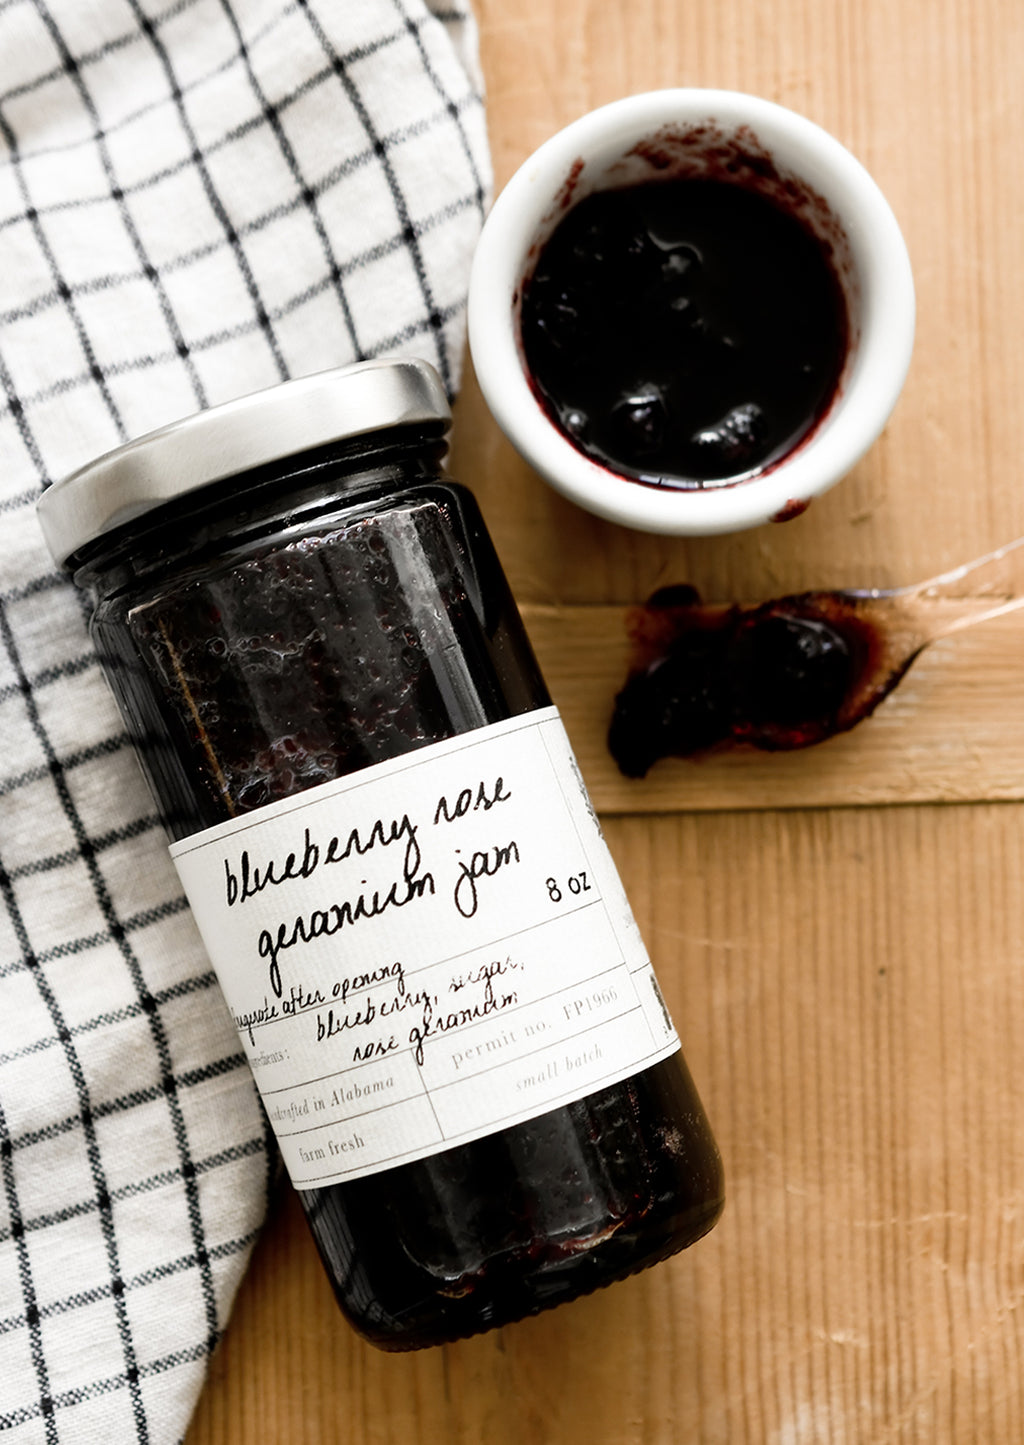 1: A glass jar of blueberry jam.